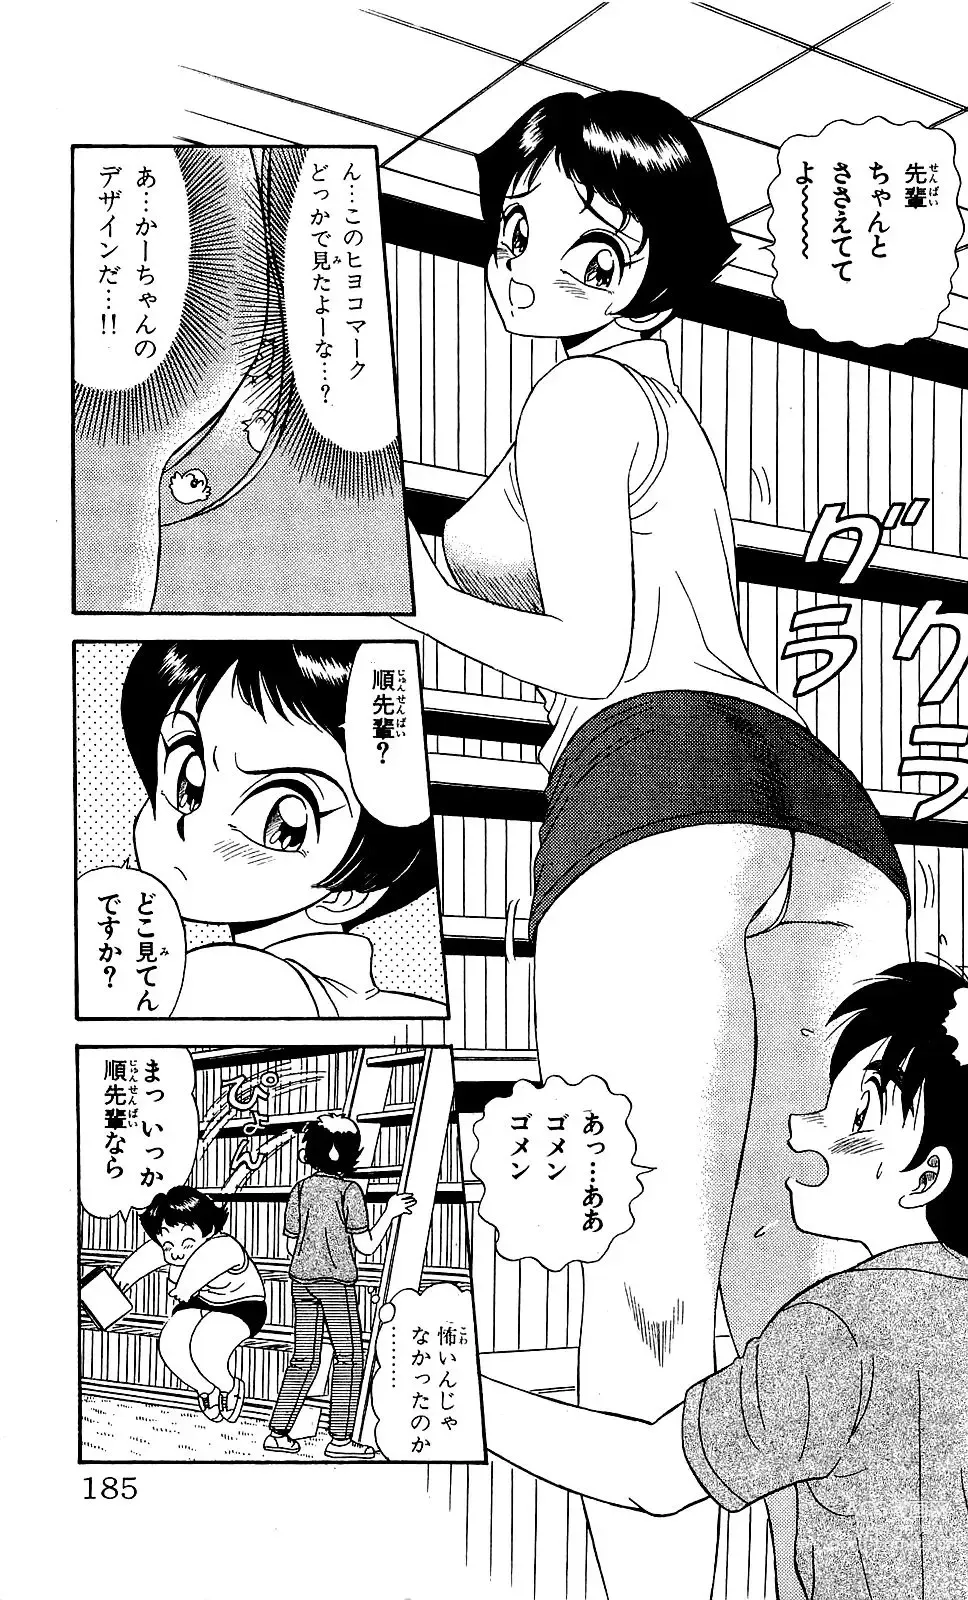 Page 183 of manga Orette Piyoritan Vol. 1